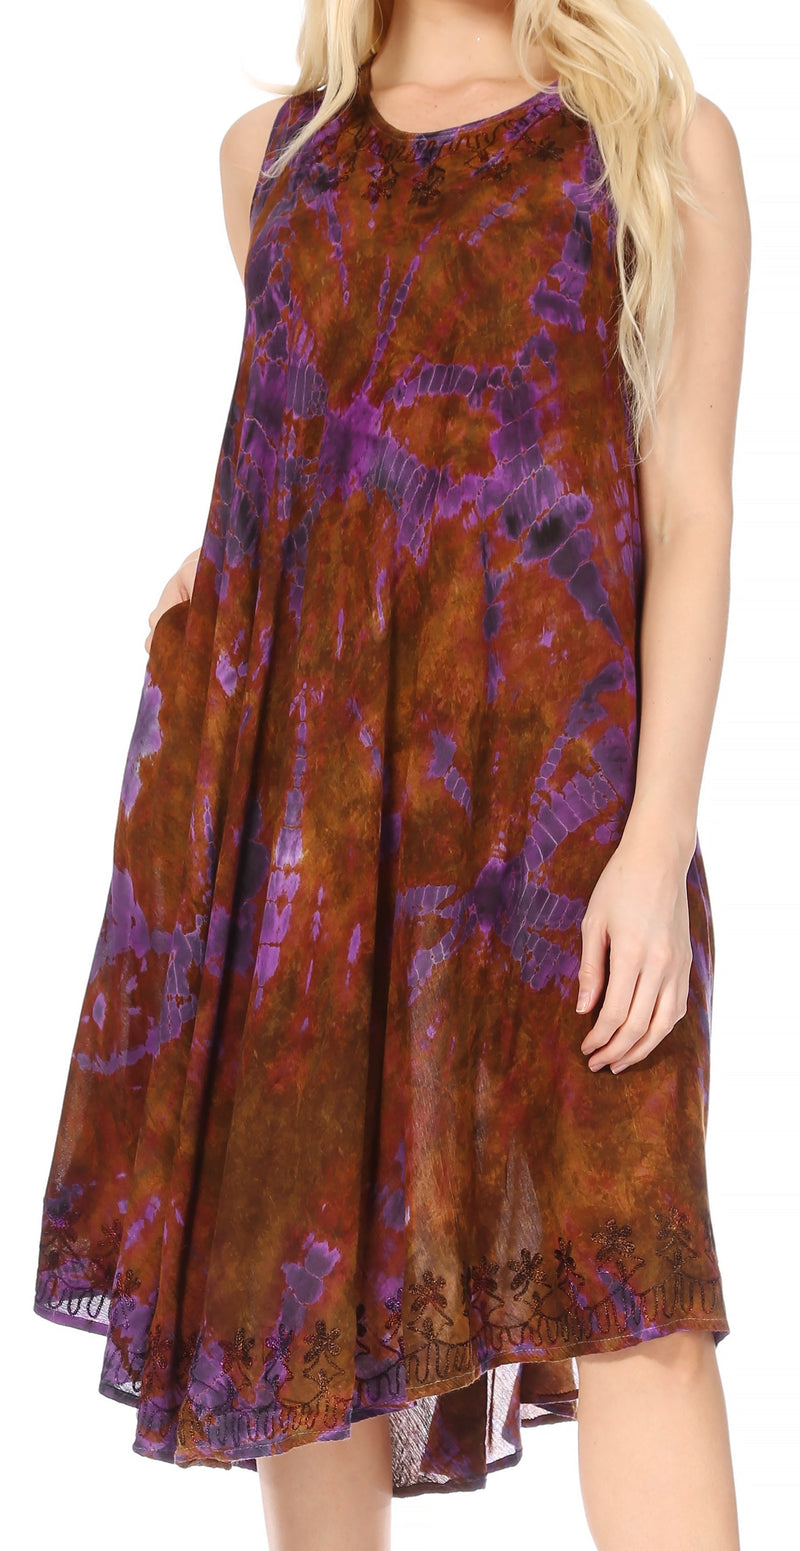 Sakkas Nora Sleeveless Embroidered Short Tie Dye Caftan Dress / Cover Up